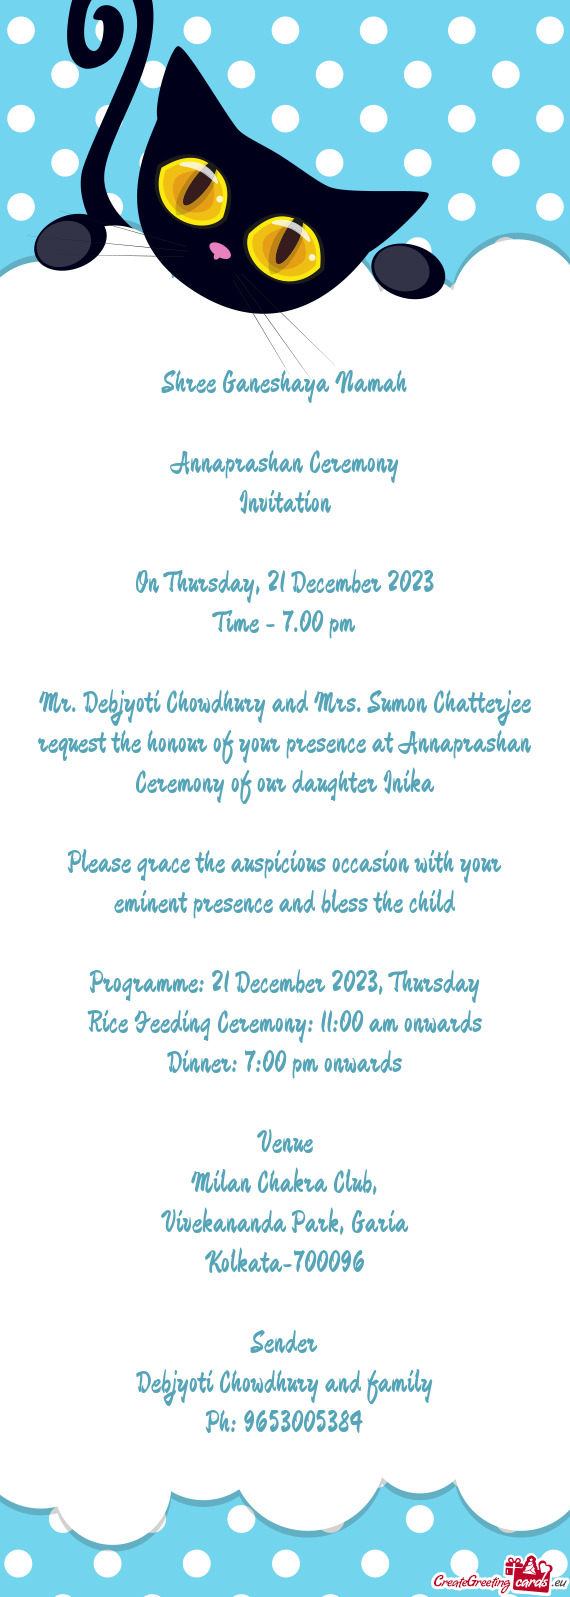 Programme: 21 December 2023, Thursday